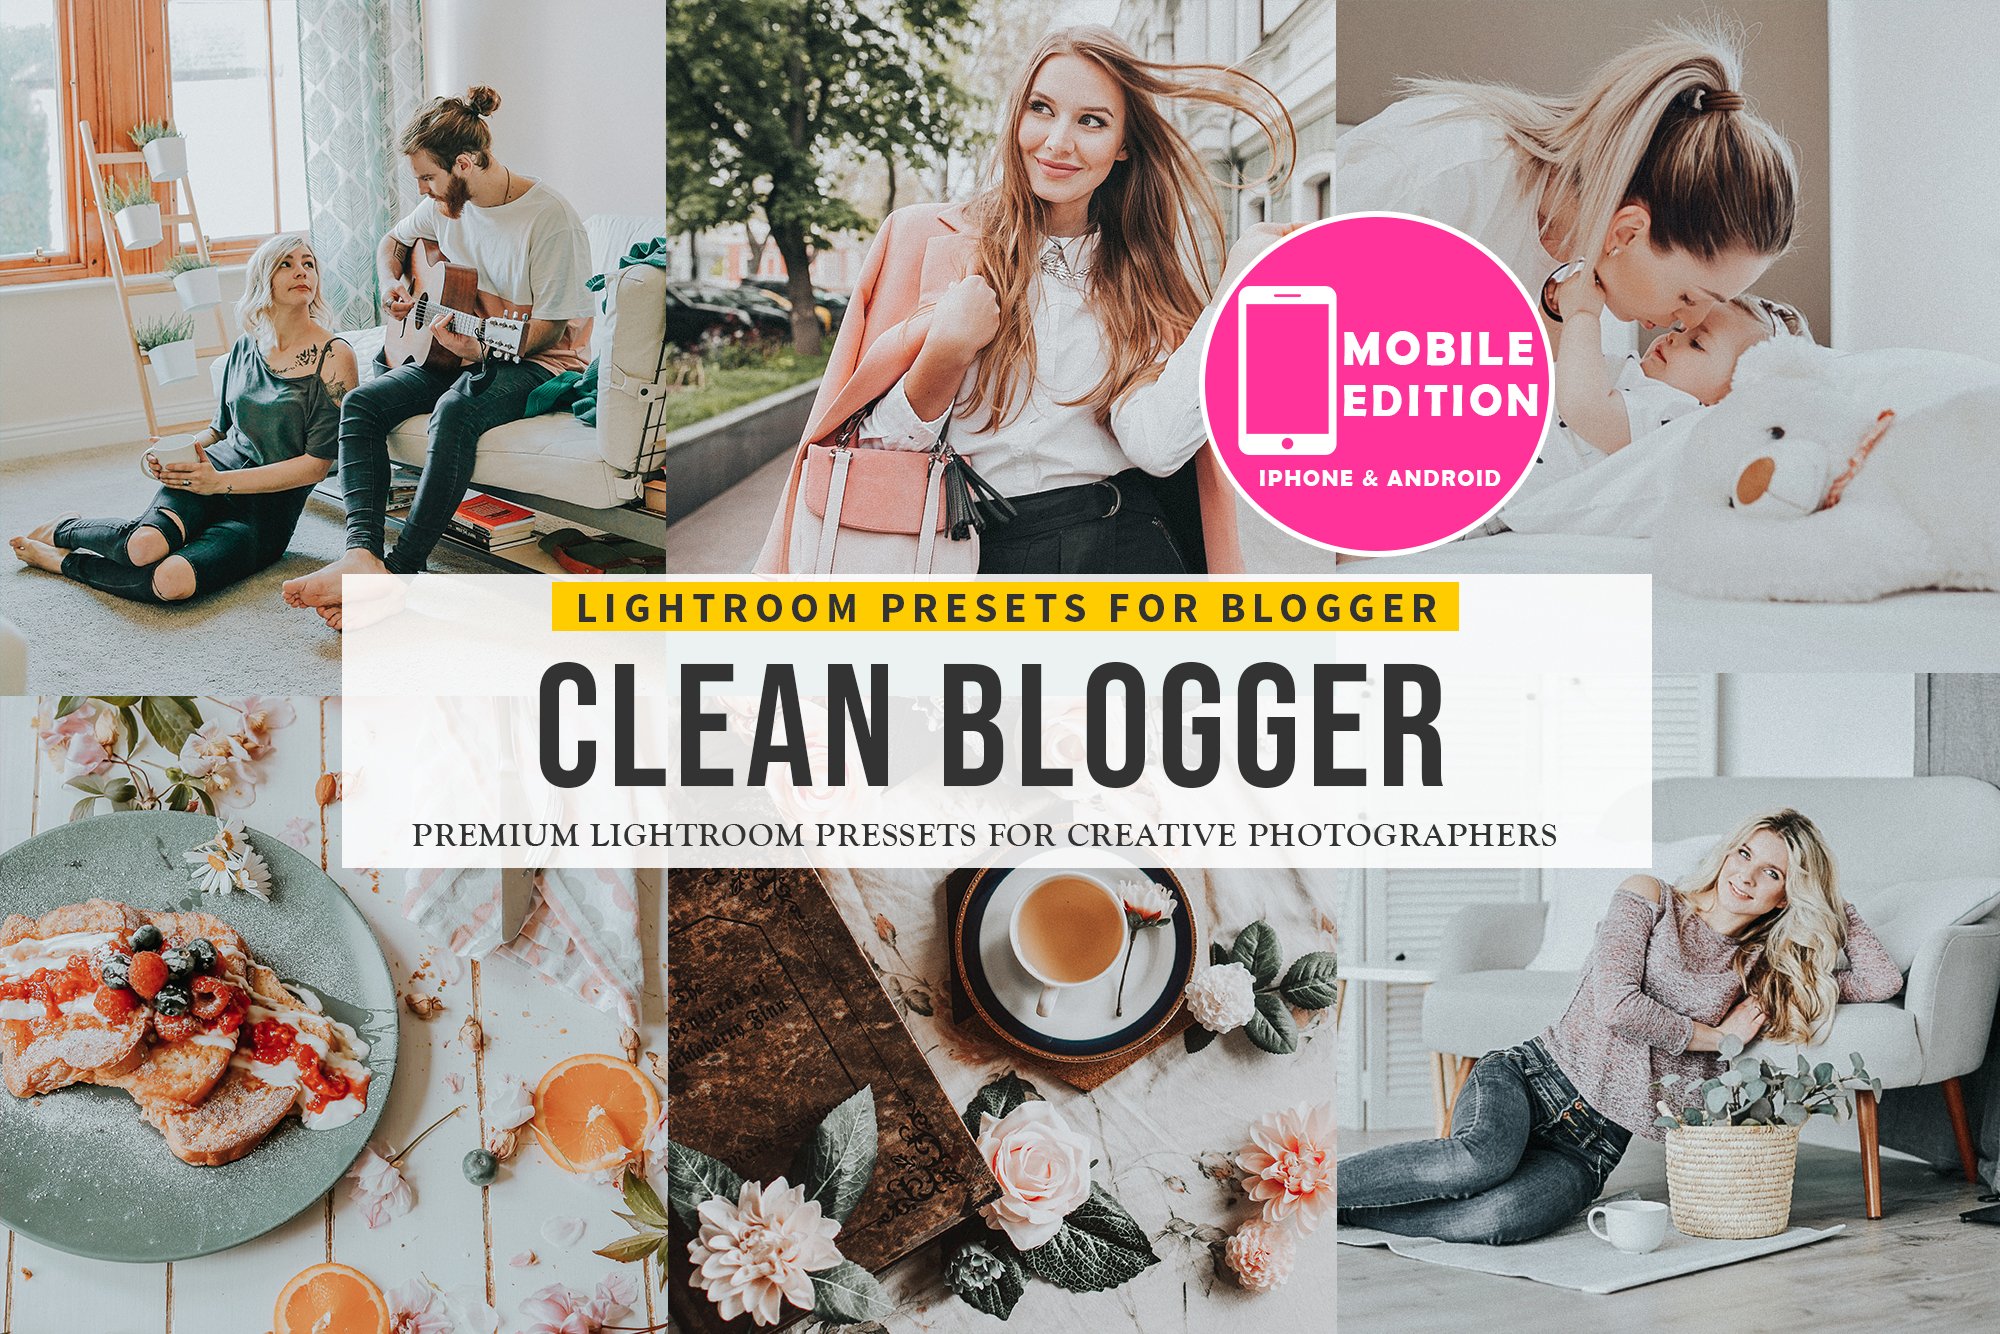 Clean blogger Lightroom presetscover image.